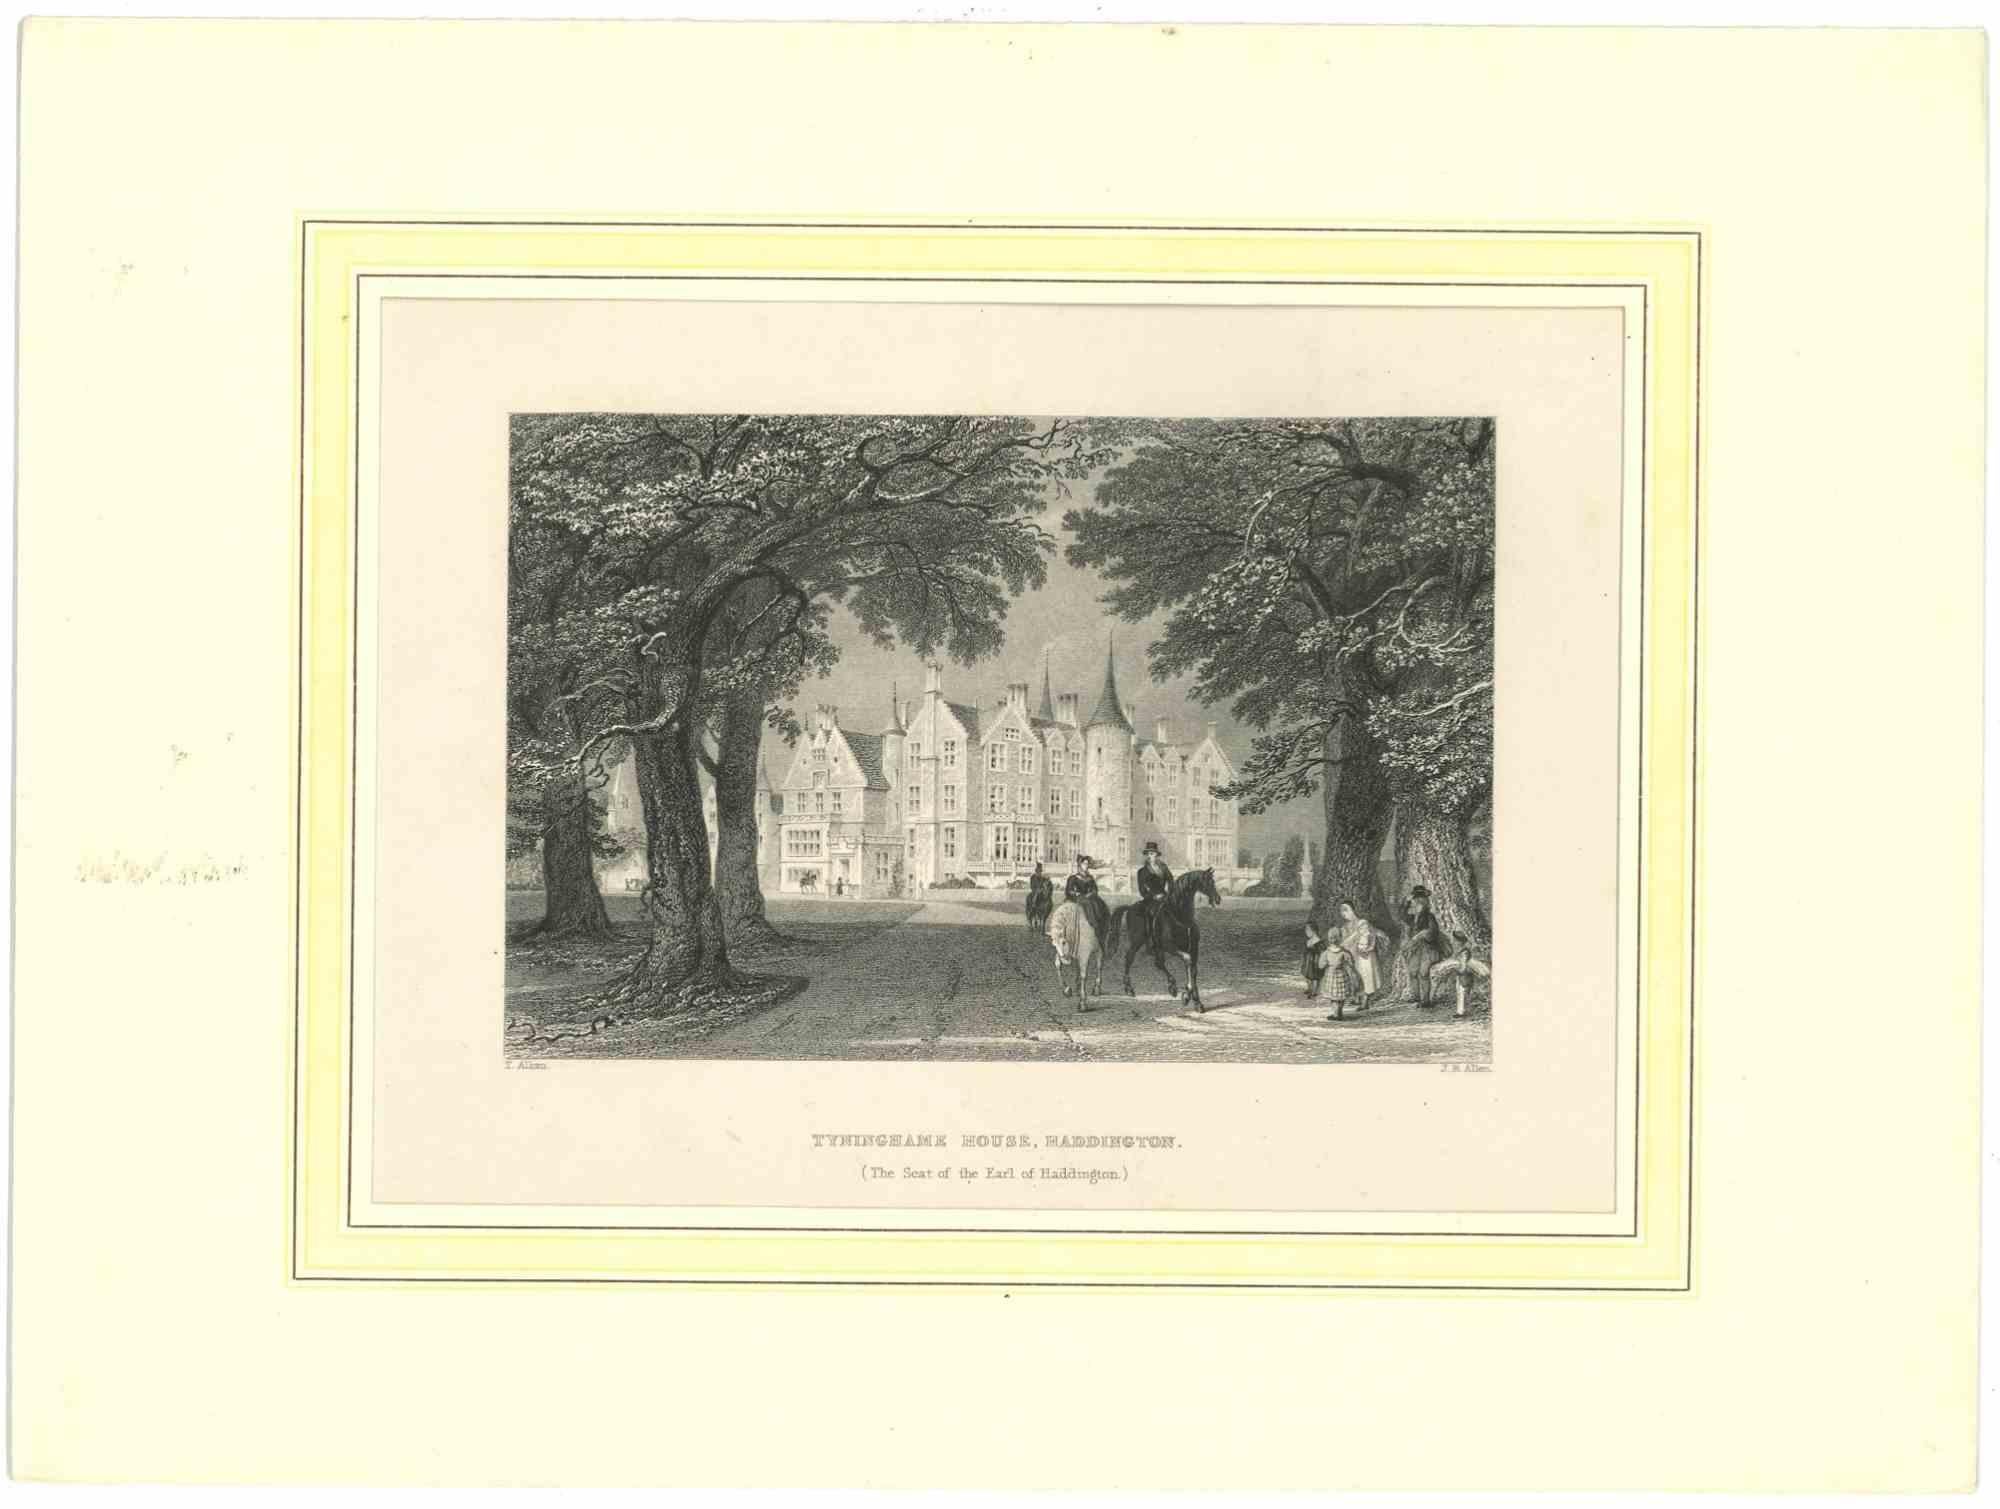 Unknown Landscape Print - Tyningame House, Haddington - Original Lithograph - Mid-19th Century